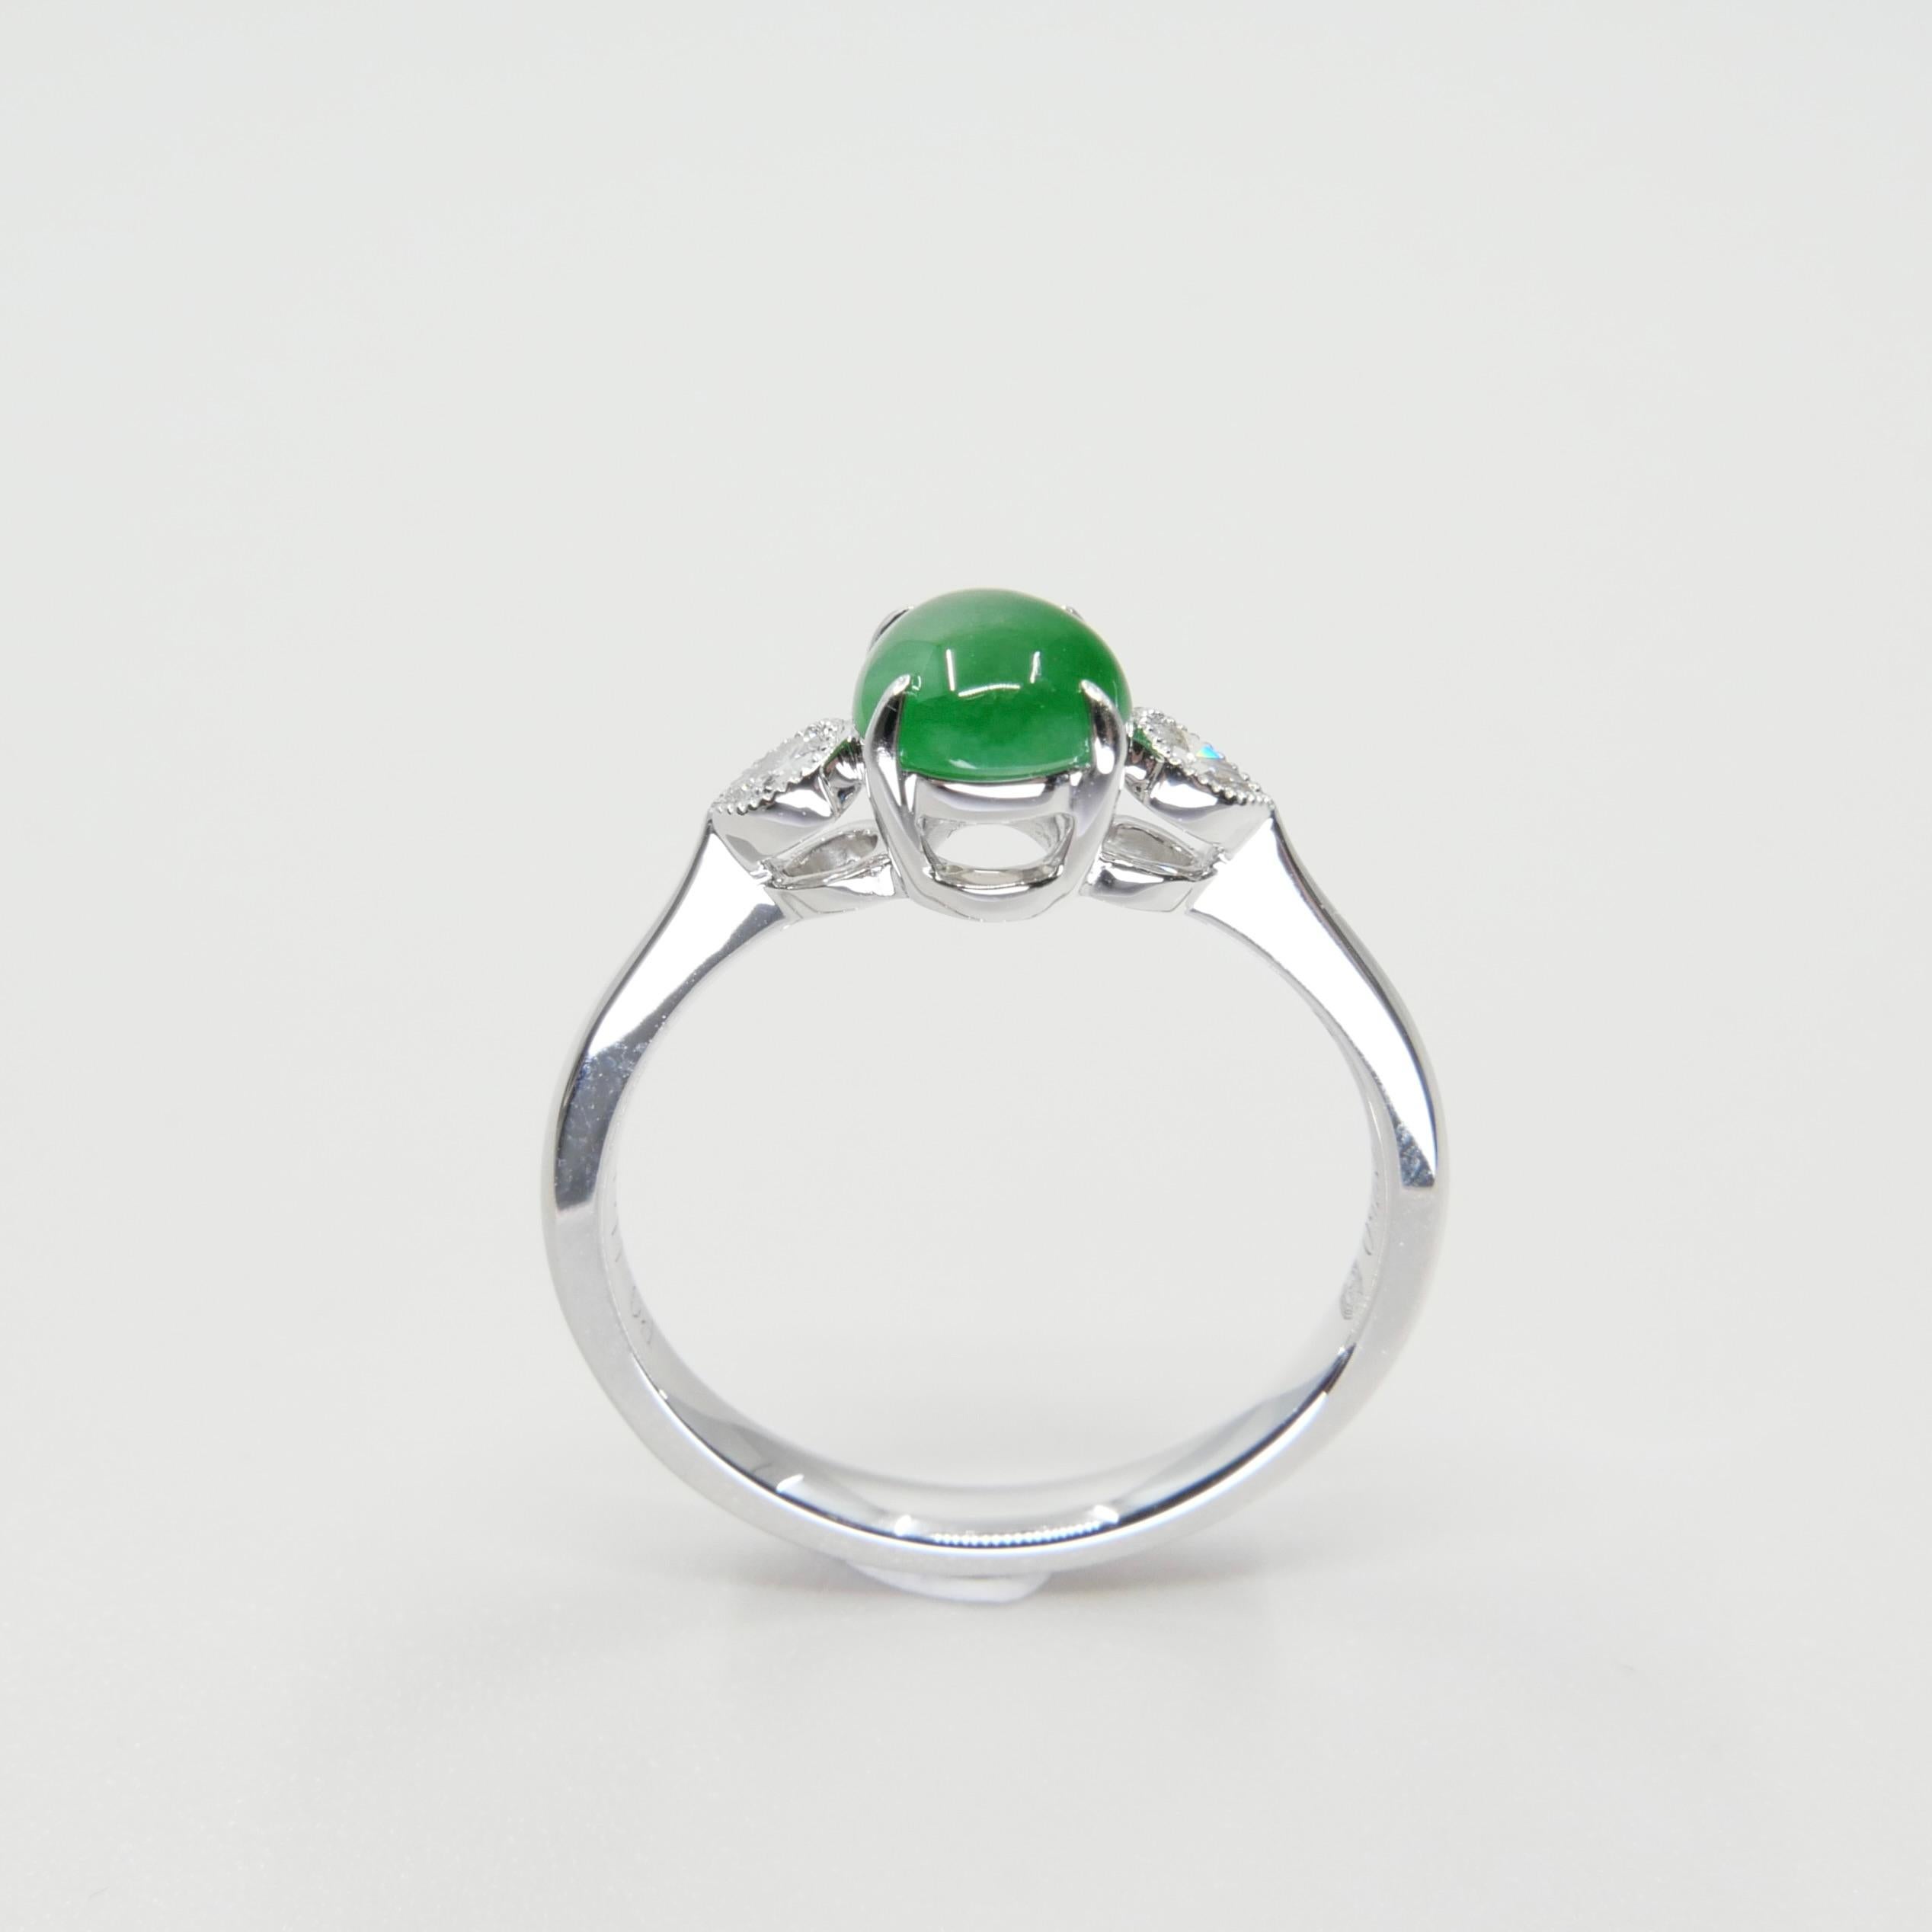 Certified Jade & Diamond 3 Stone Ring, True Imperial Green, Dainty & Elegant For Sale 2